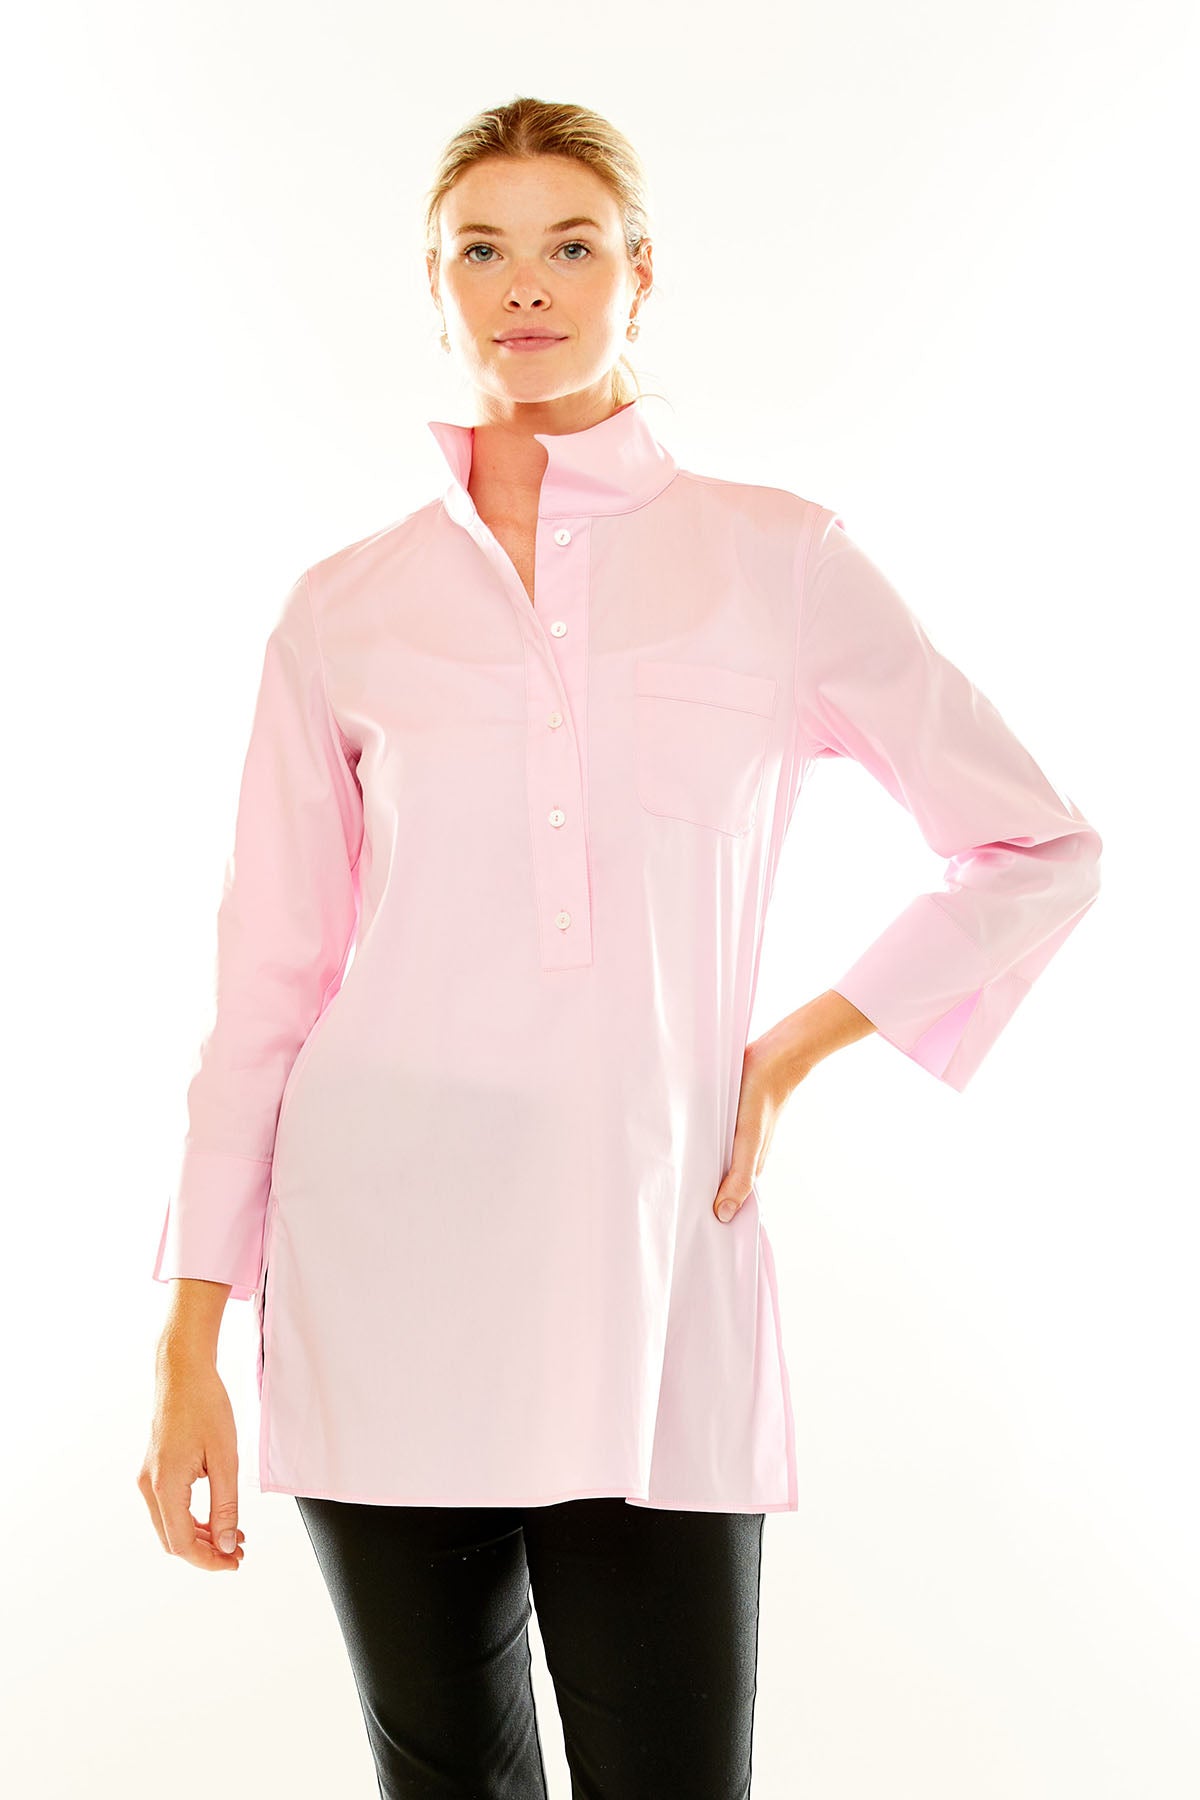 Woman in pink tunic